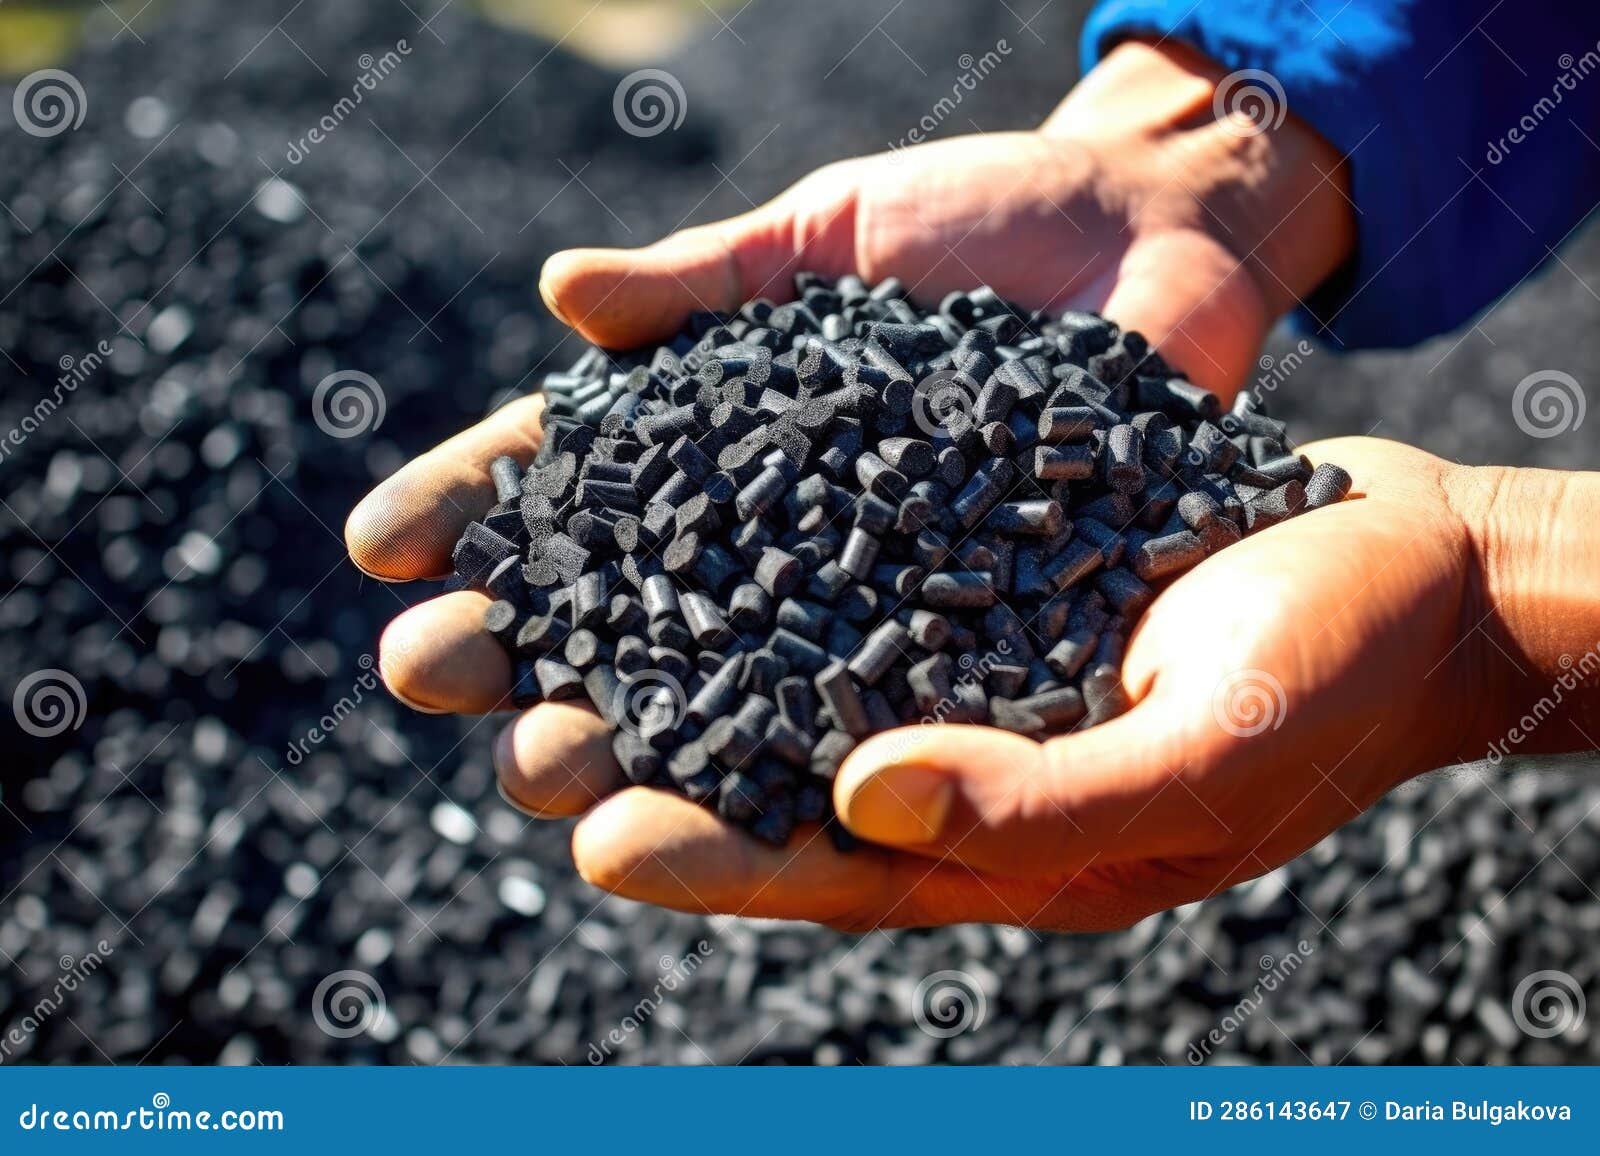 man hands hold black granules biochar pellets. handful of charcoal pellets fuel in a person hands. organic biochar derived made